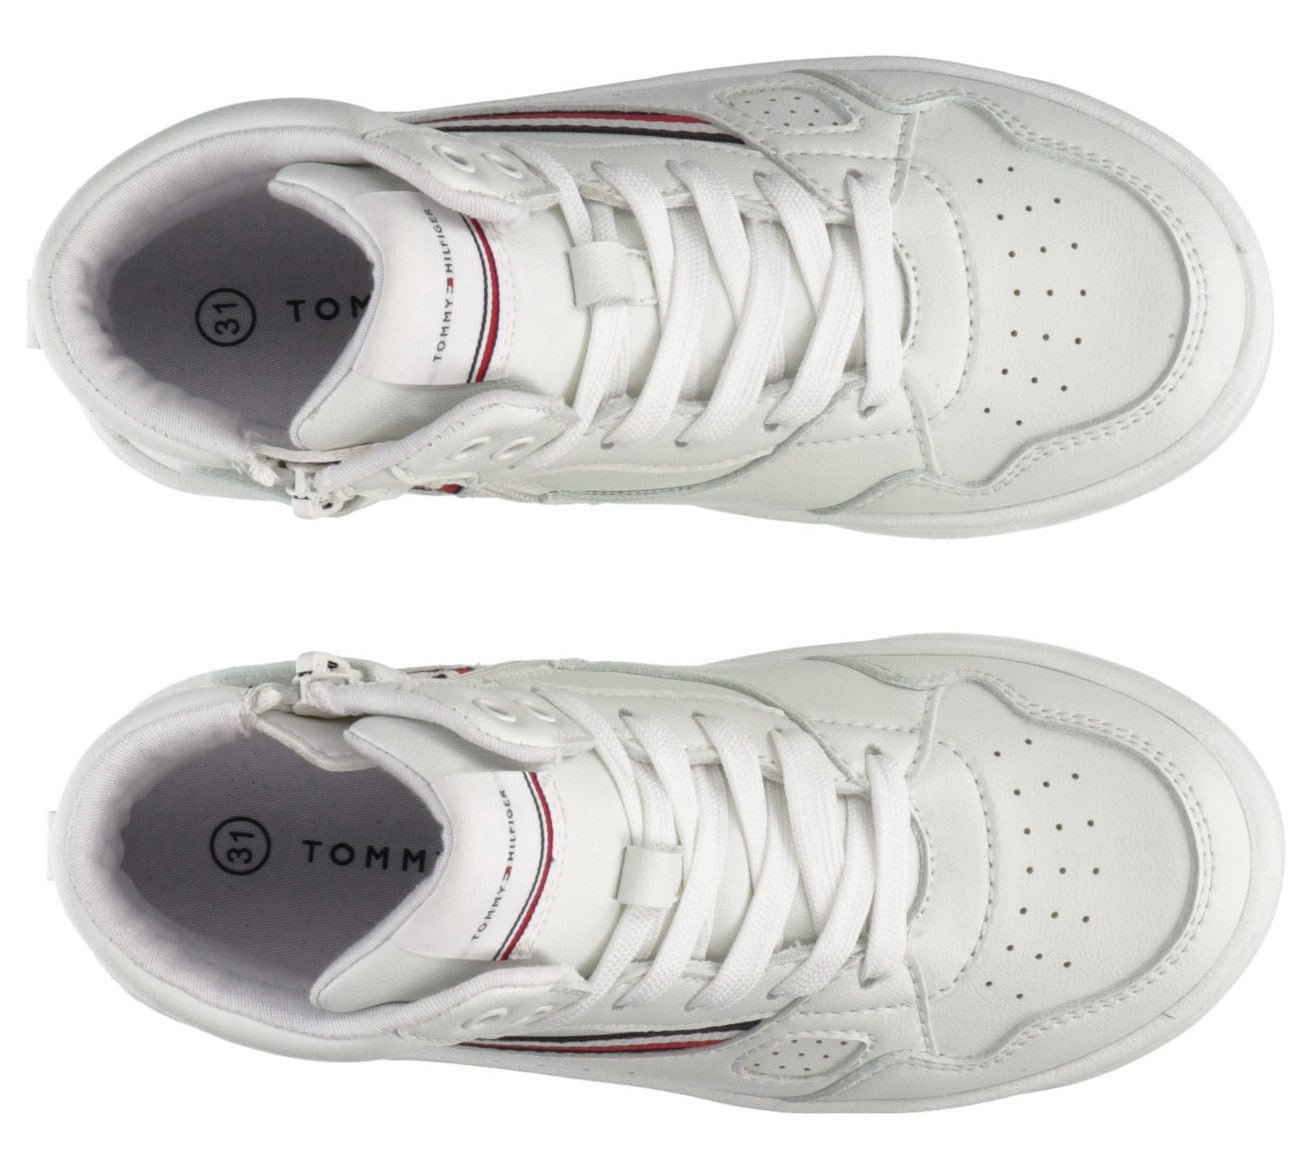 Tommy Hilfiger mit ▷ SNEAKER«, Logofarben TOP HIGH in LACE-UP Textilband | Sneaker BAUR »STRIPES für